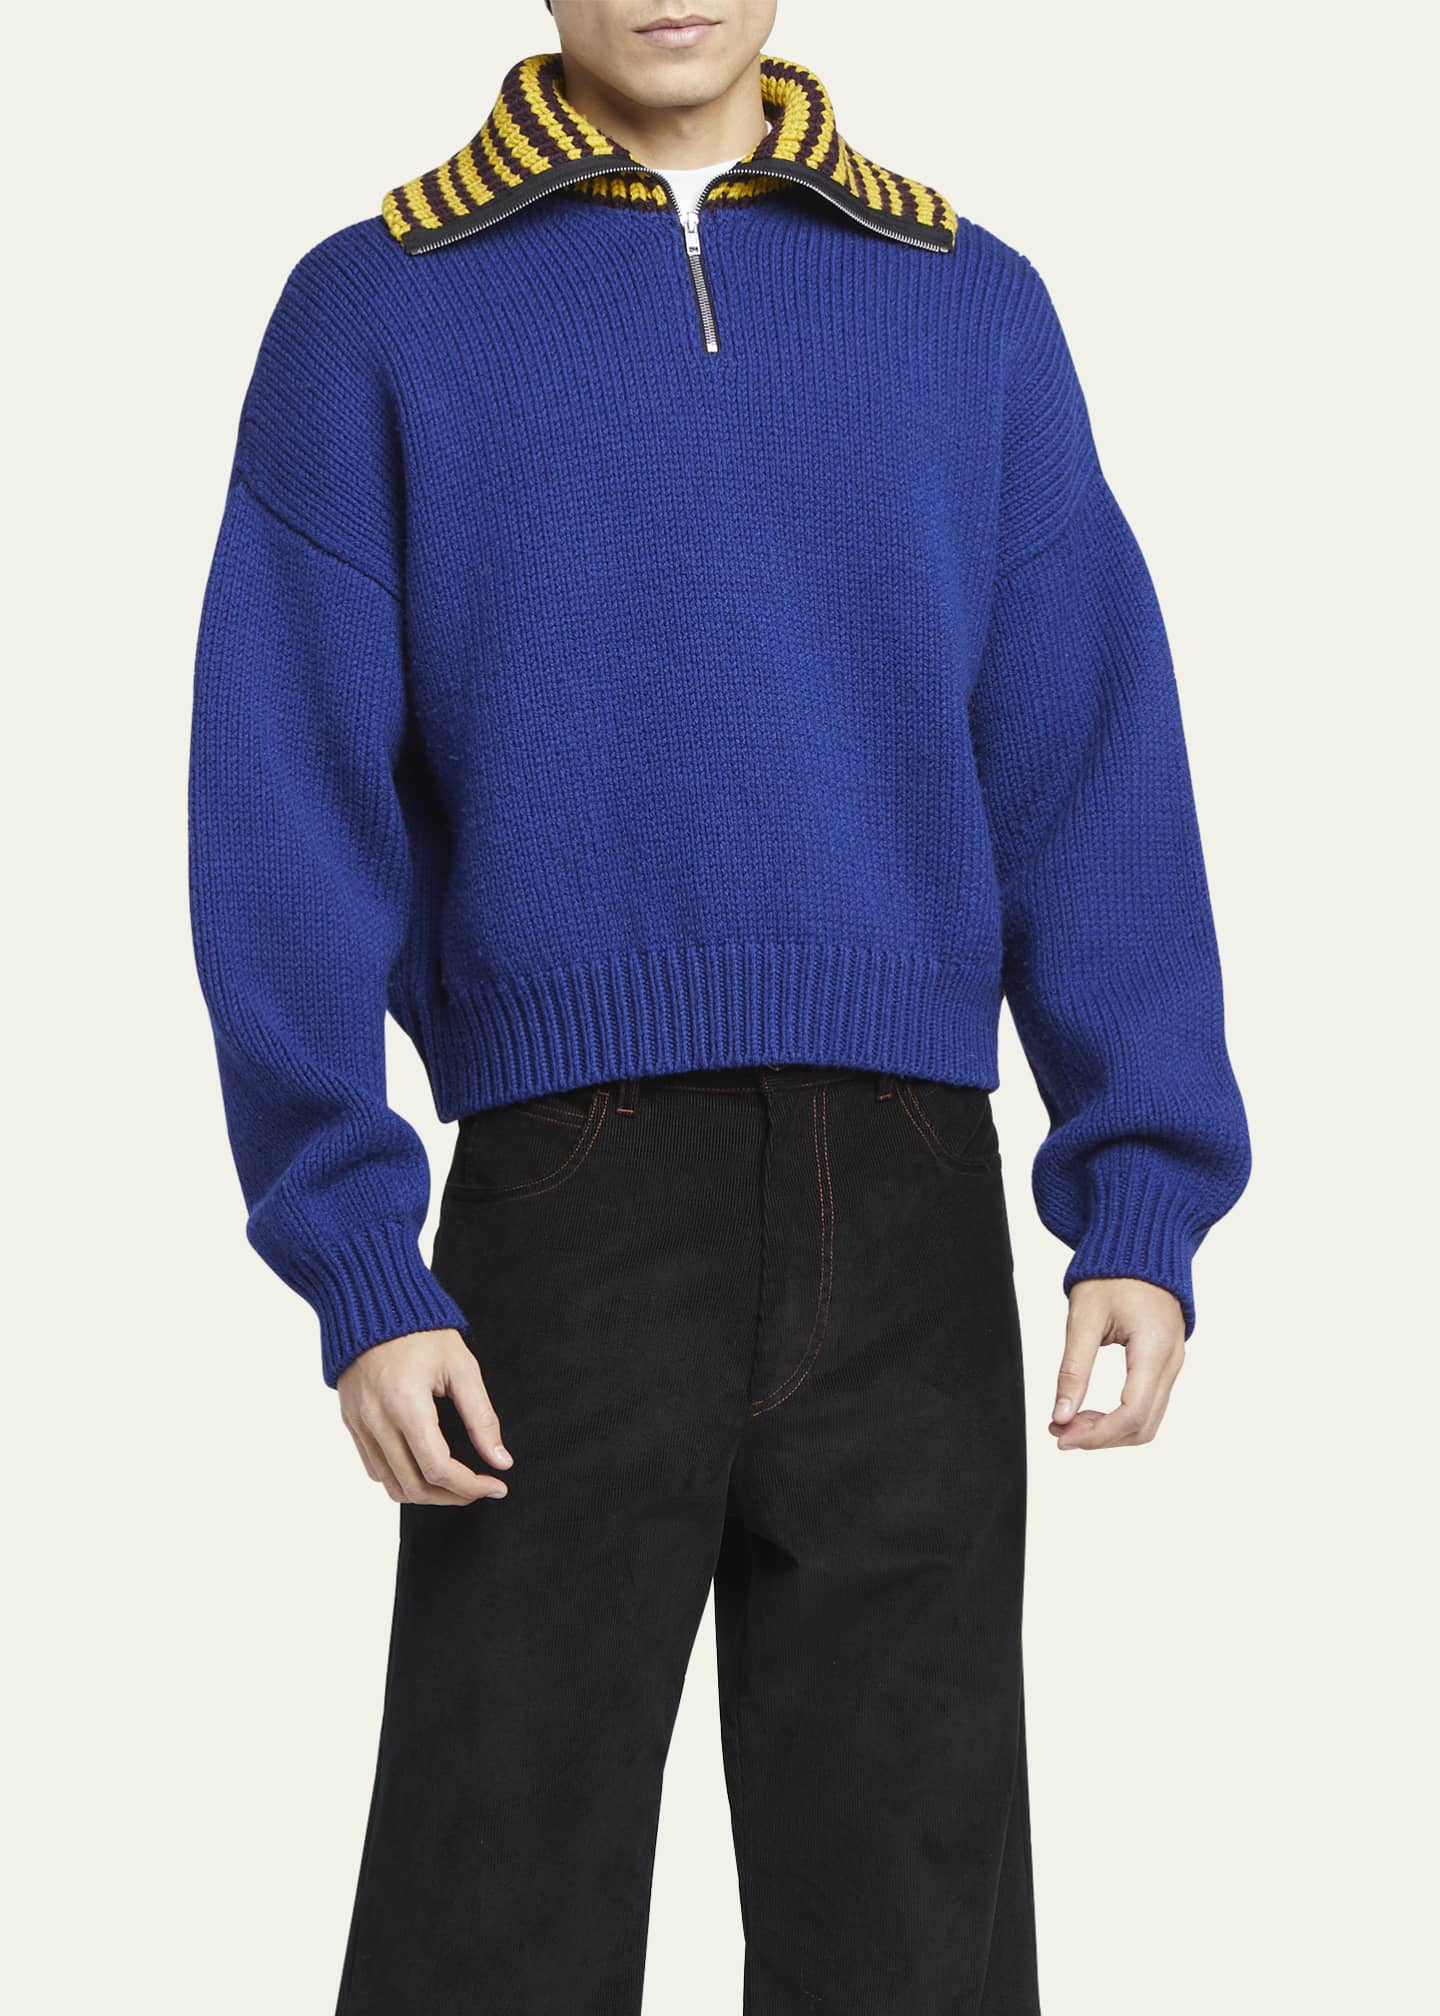 Marni Men's Wool Sweater With Sailor Foldover Collar